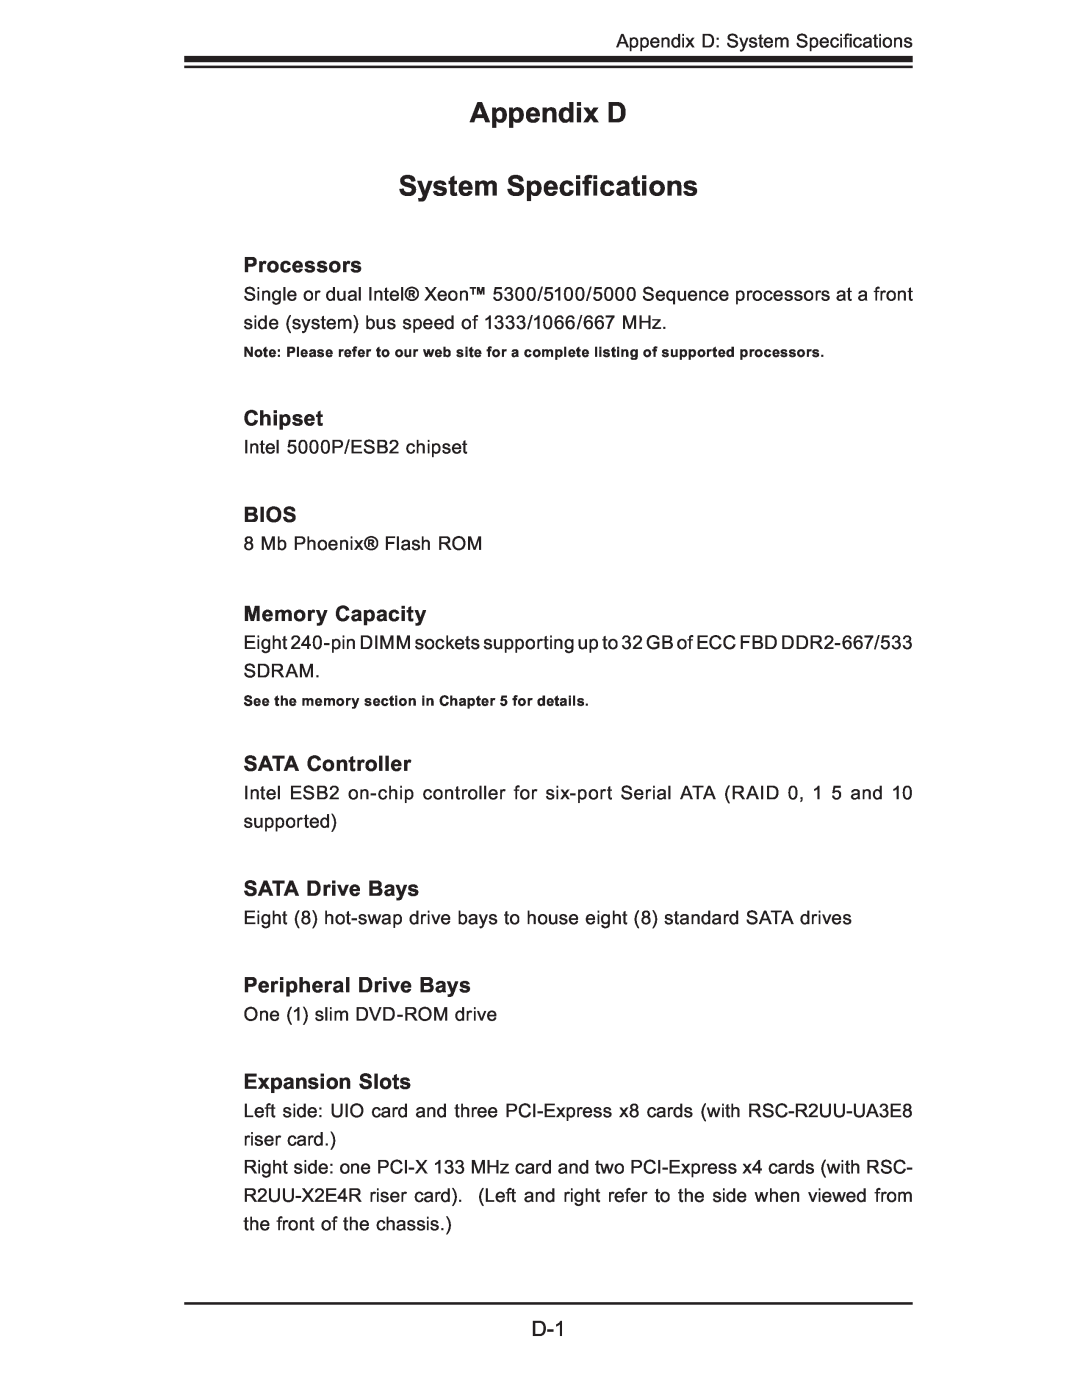 SUPER MICRO Computer 6025B-UR Appendix D System Speciﬁcations, Chipset, Bios, Memory Capacity, SATA Controller, Processors 